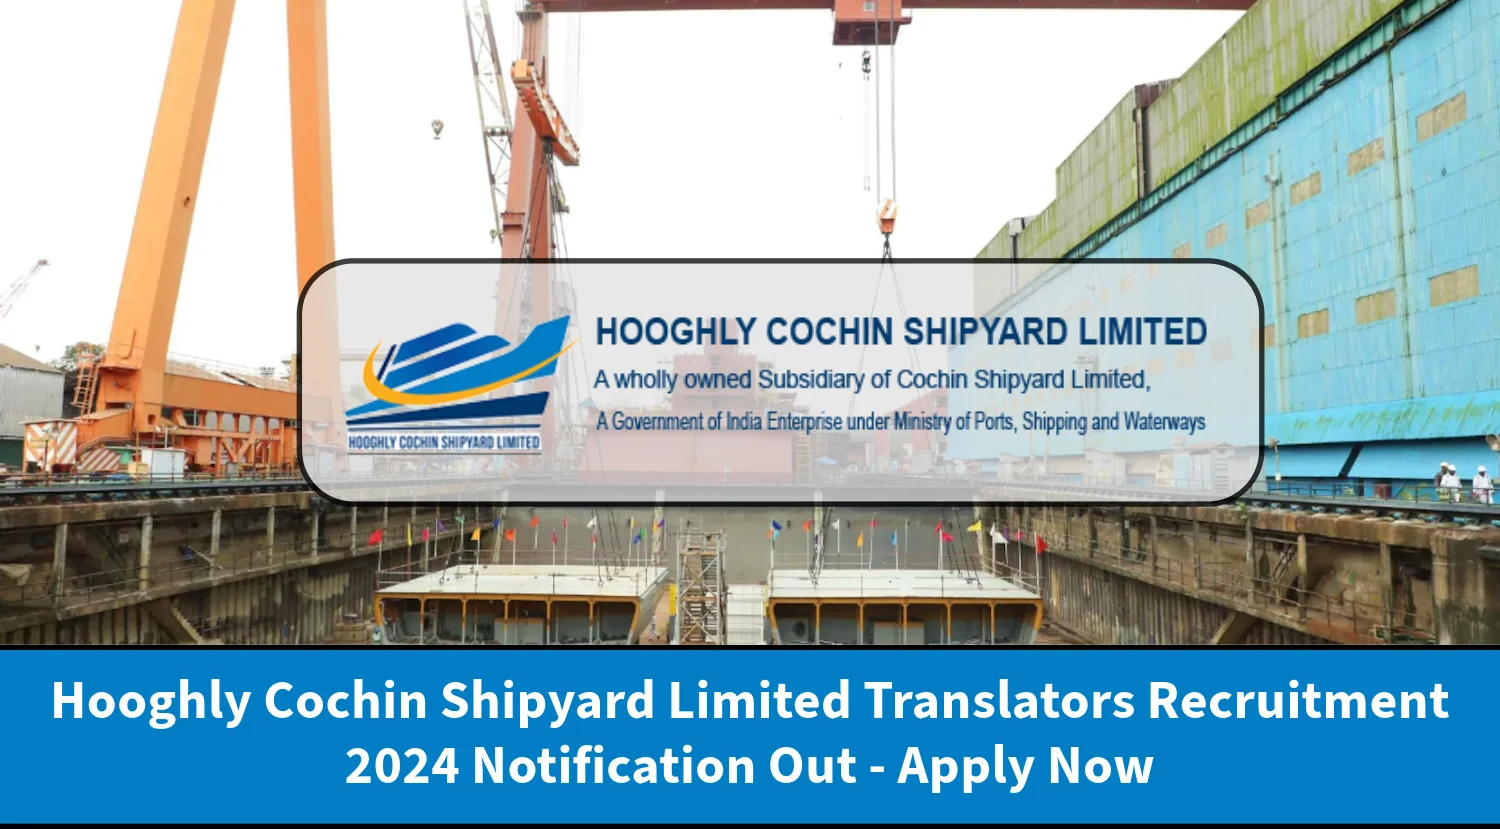 Hooghly Cochin Shipyard Limited Translators Recruitment 2024 Notification Out